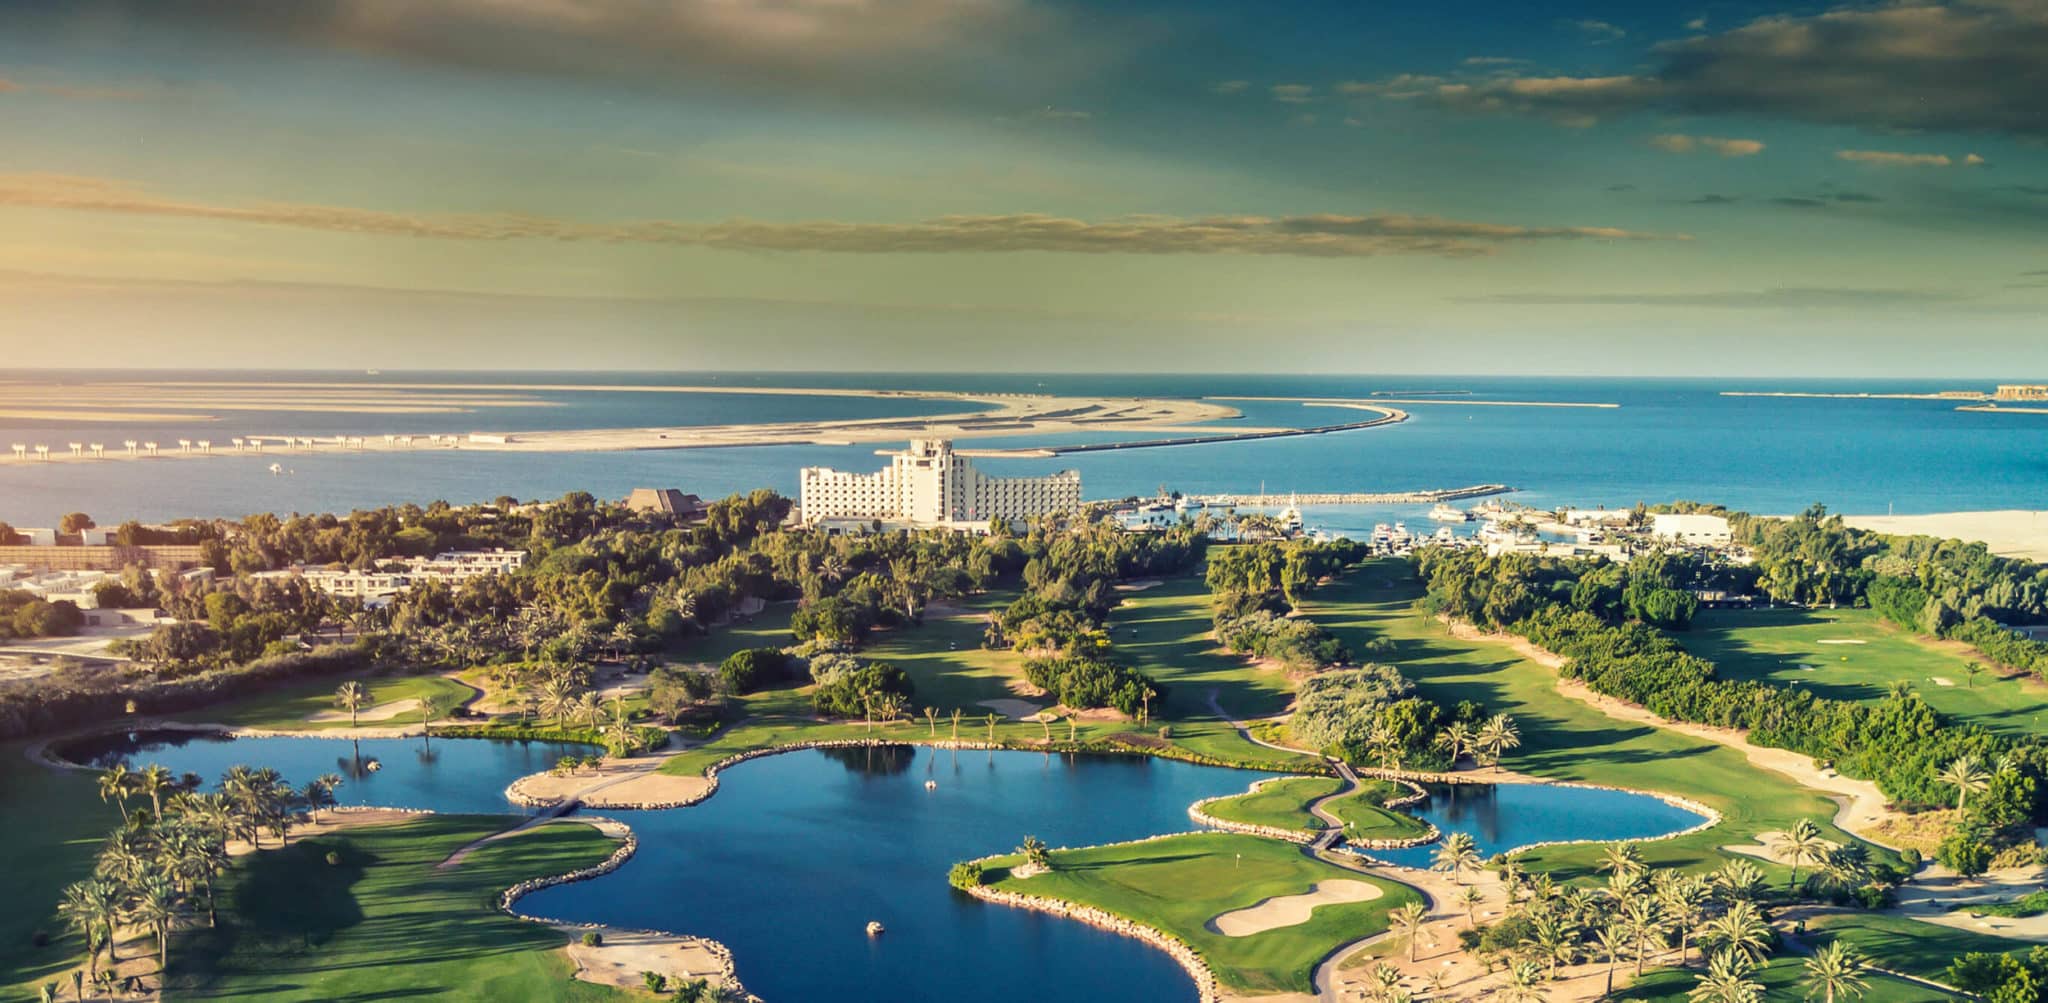 Jebel Ali Golf Resort - 9 hole course in Dubai - Lecoingolf